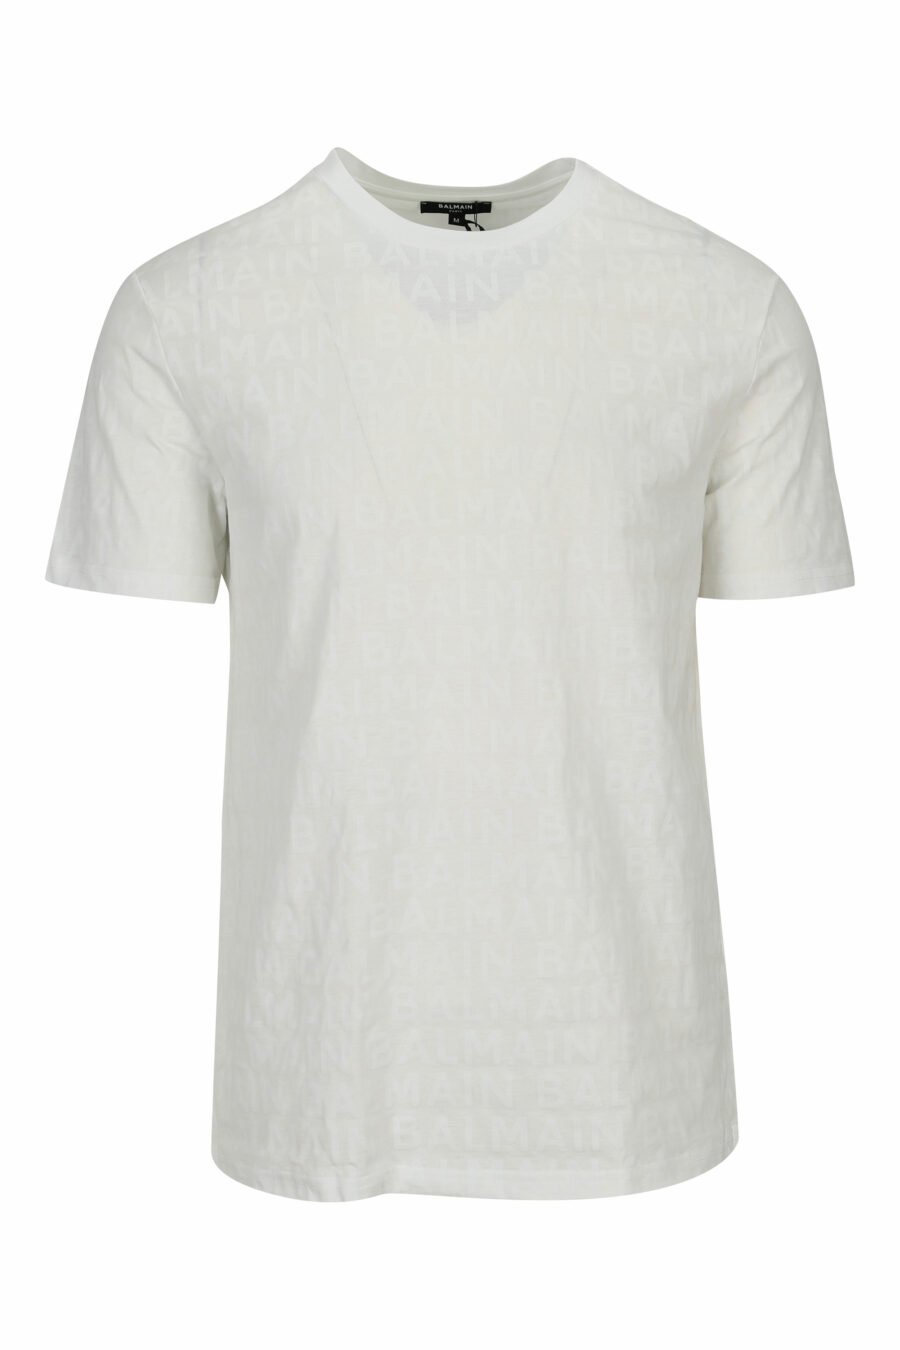 Camiseta blanca con monograma monocromático - 8032674525390